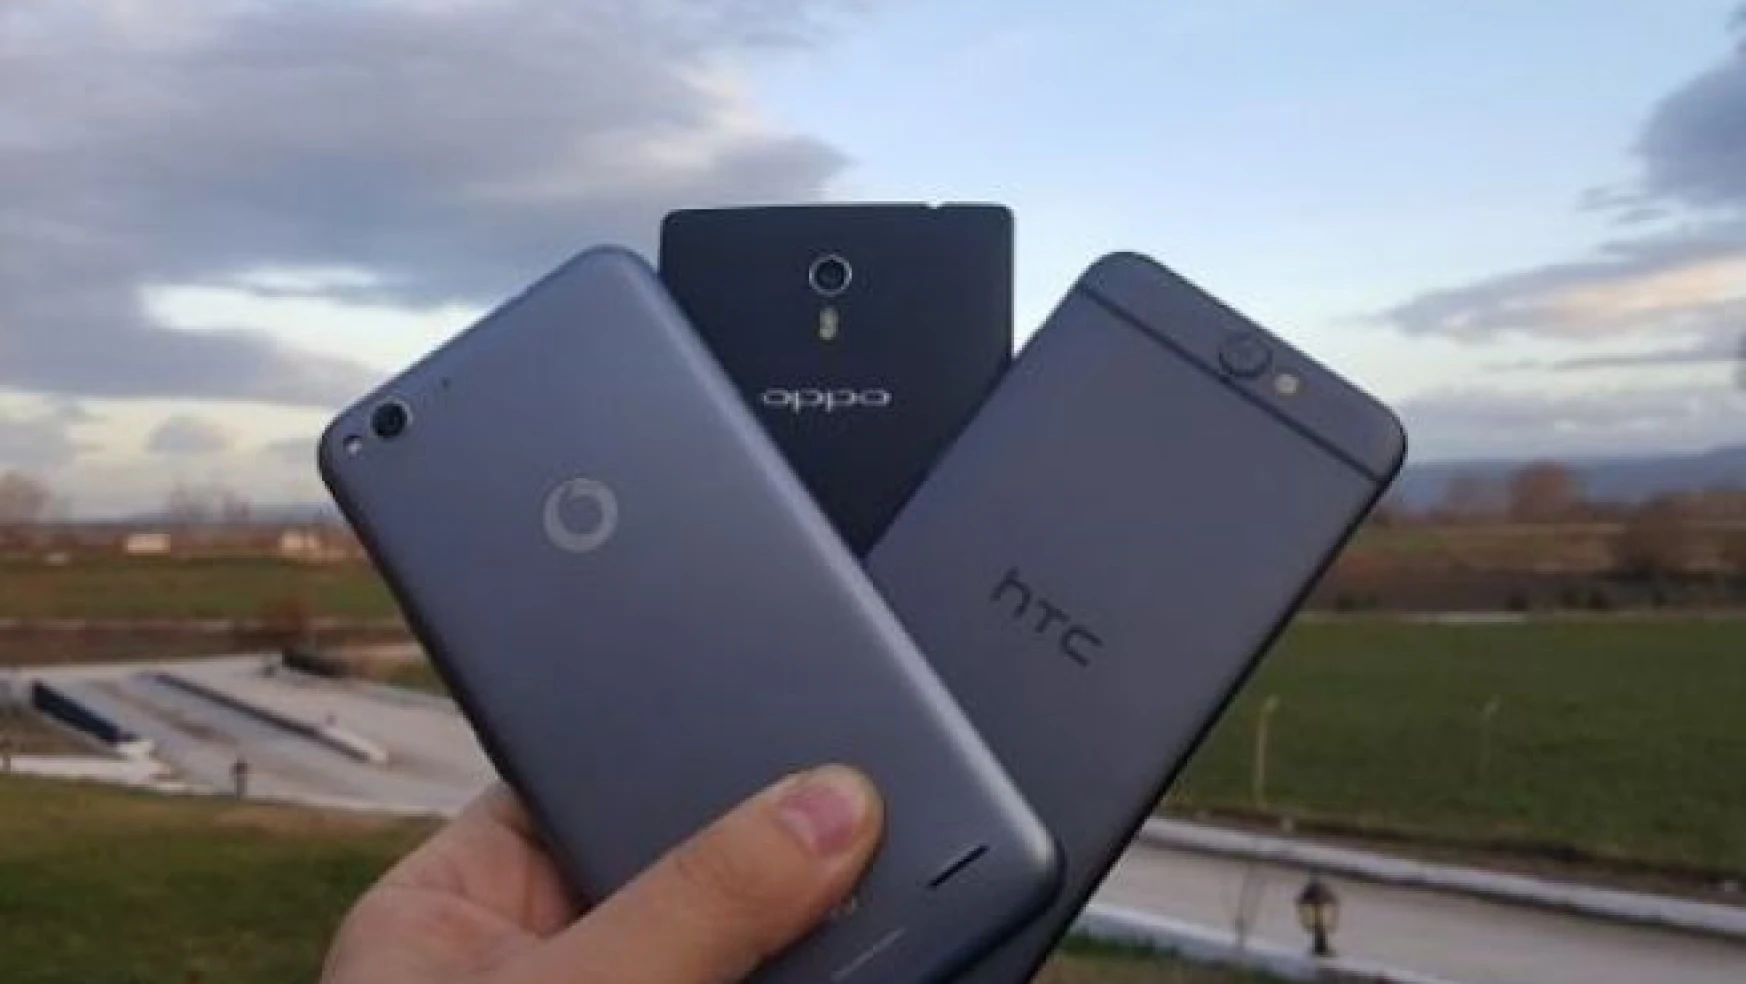 HTC One A9, Vodafone Smart 6 ve Oppo Find 7 karşılaştırma